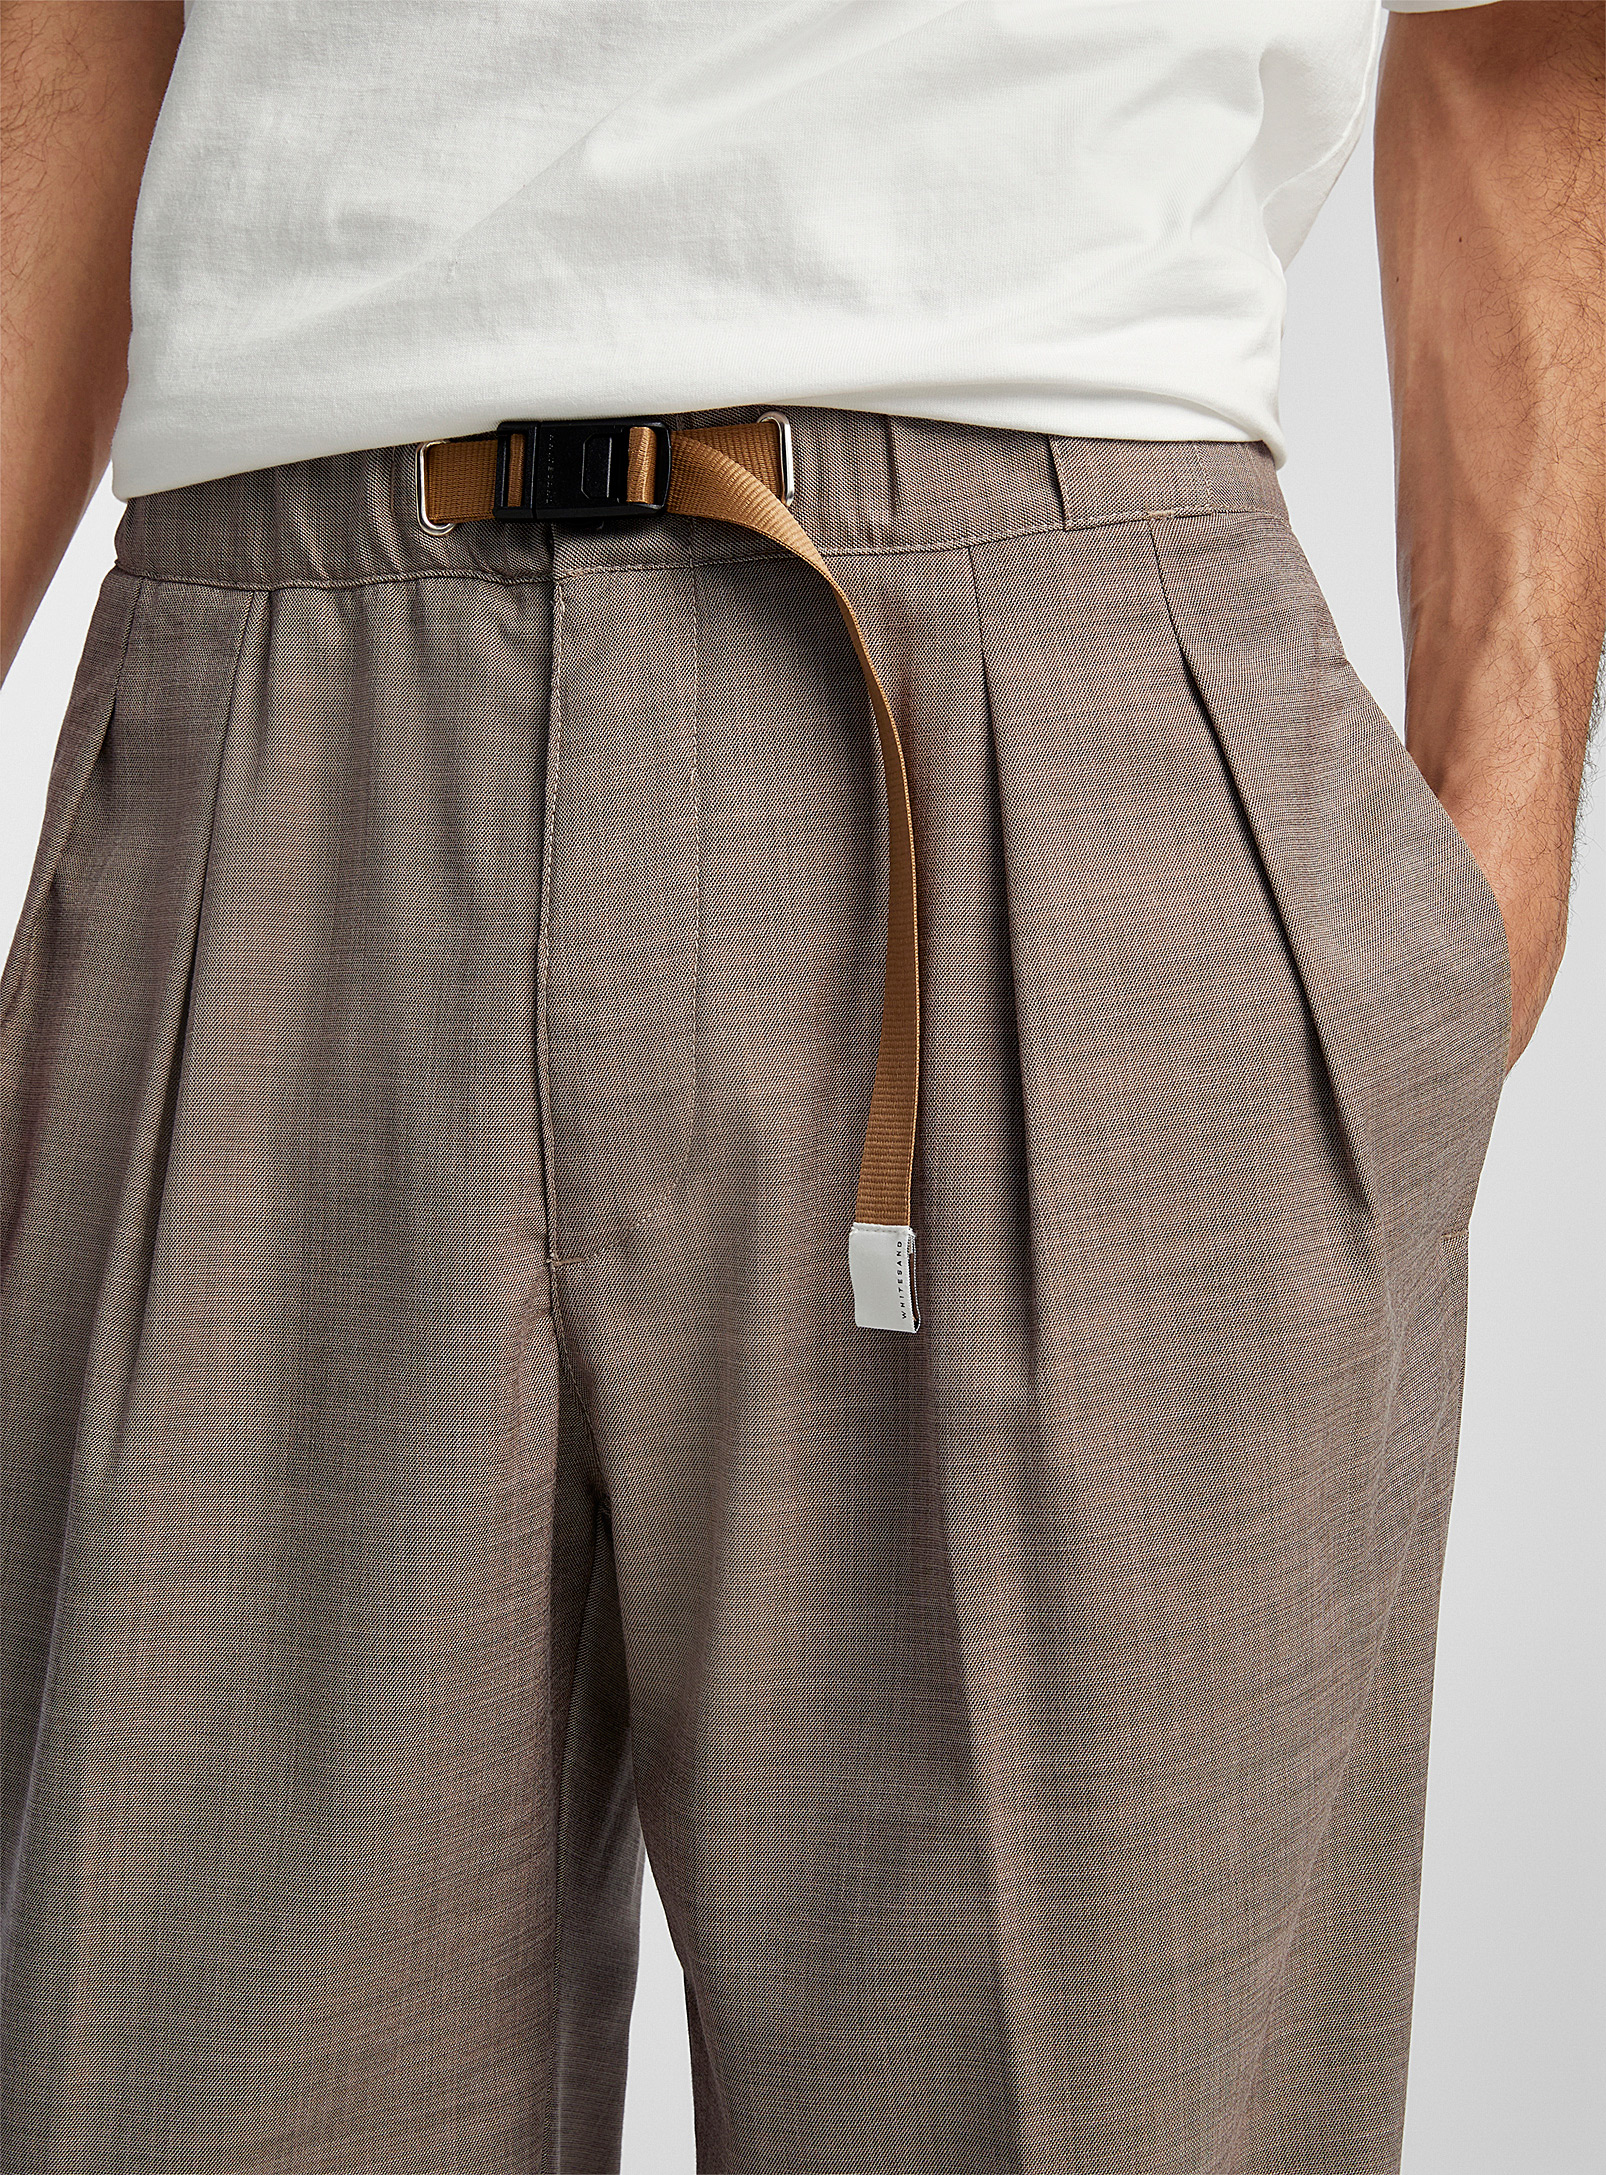 Whitesand - Le pantalon en chambray à jambe large